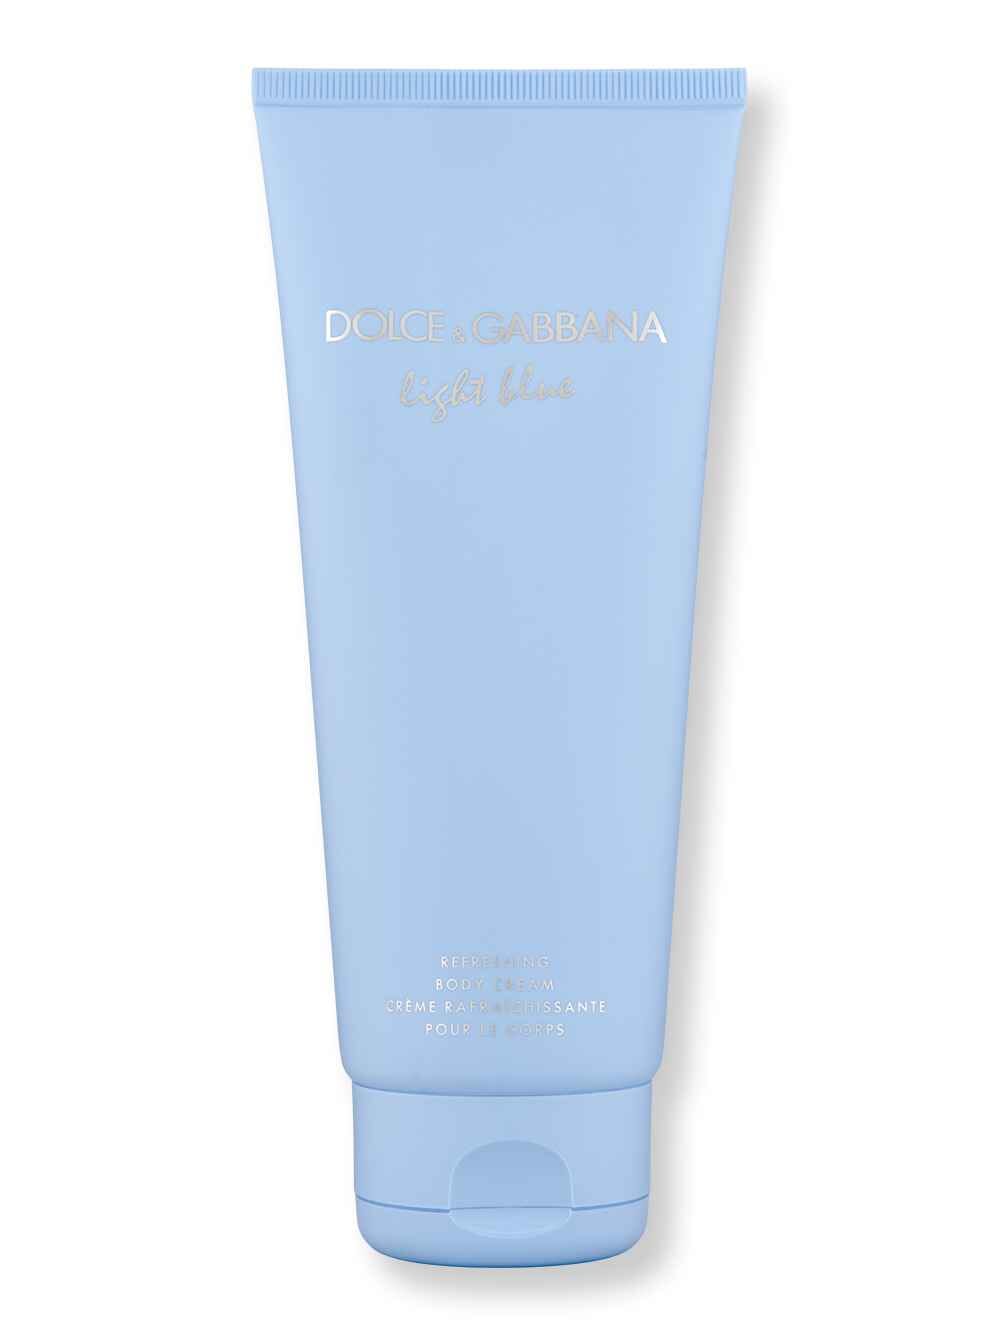 Dolce & Gabbana Dolce & Gabbana Light Blue Body Cream 6.7 oz Body Lotions & Oils 